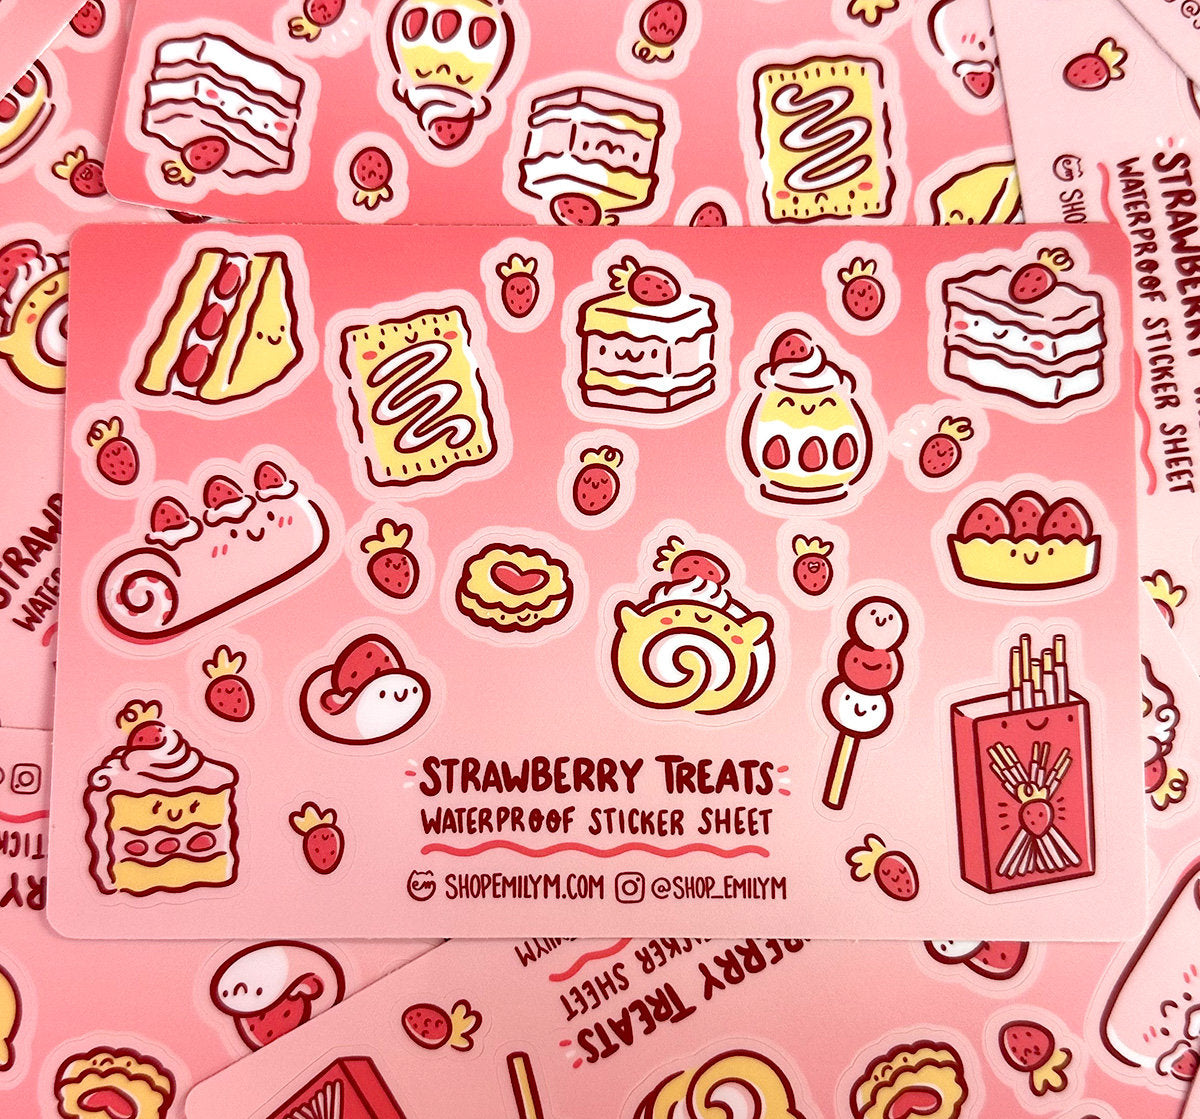 Strawberry Treats Sticker Sheet